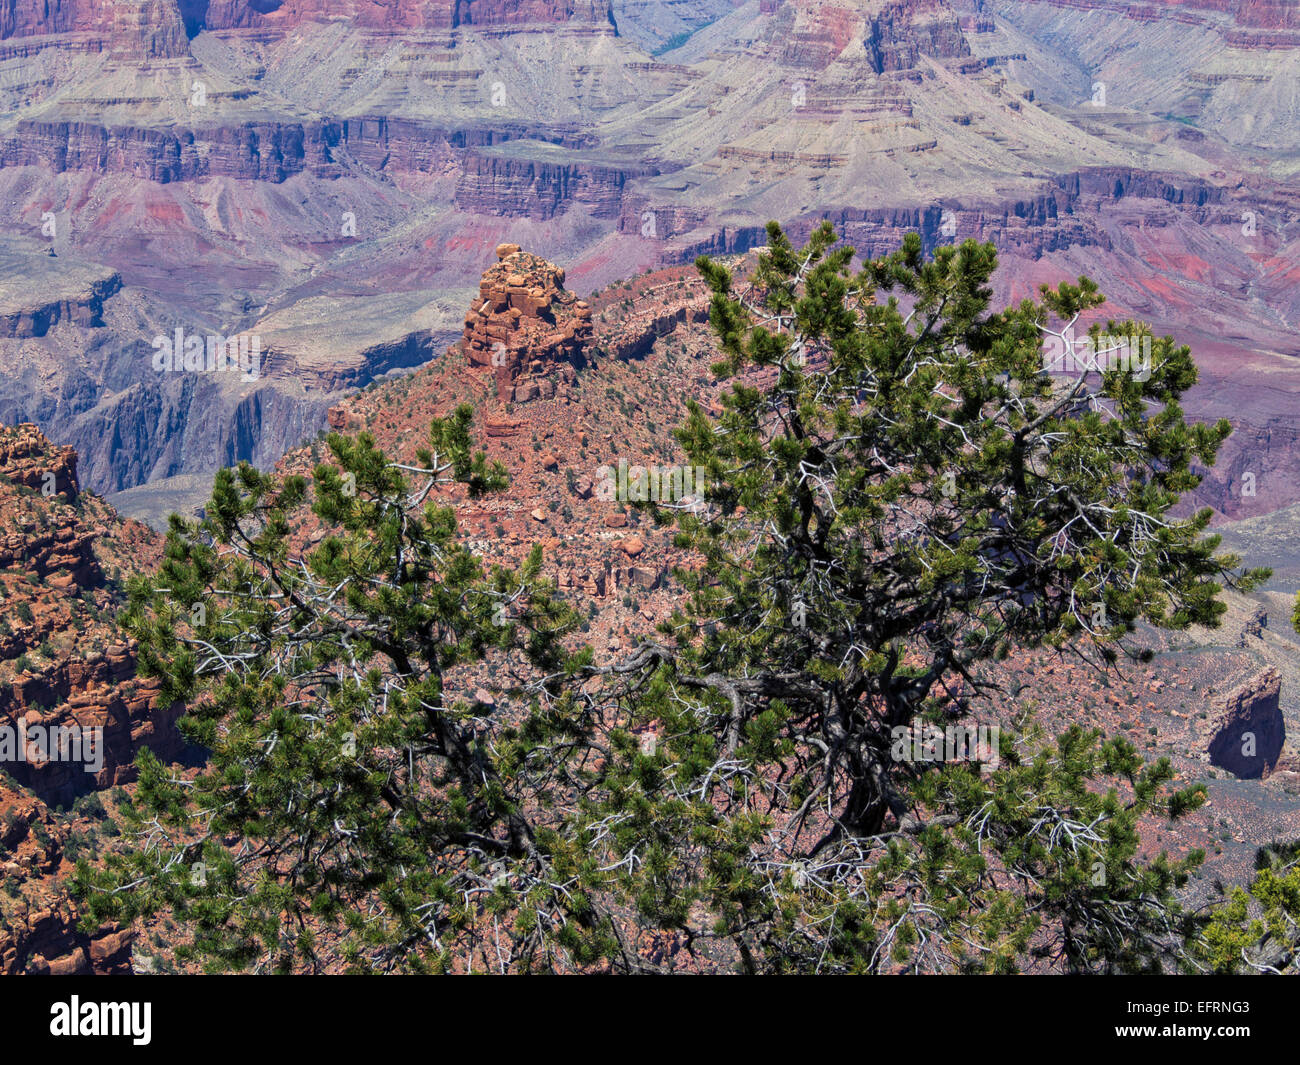 View from Pipe Creek Vista south rim Grand Canyon Arizona USA, red rock formations pinyon pine tree, national park landmark Stock Photo